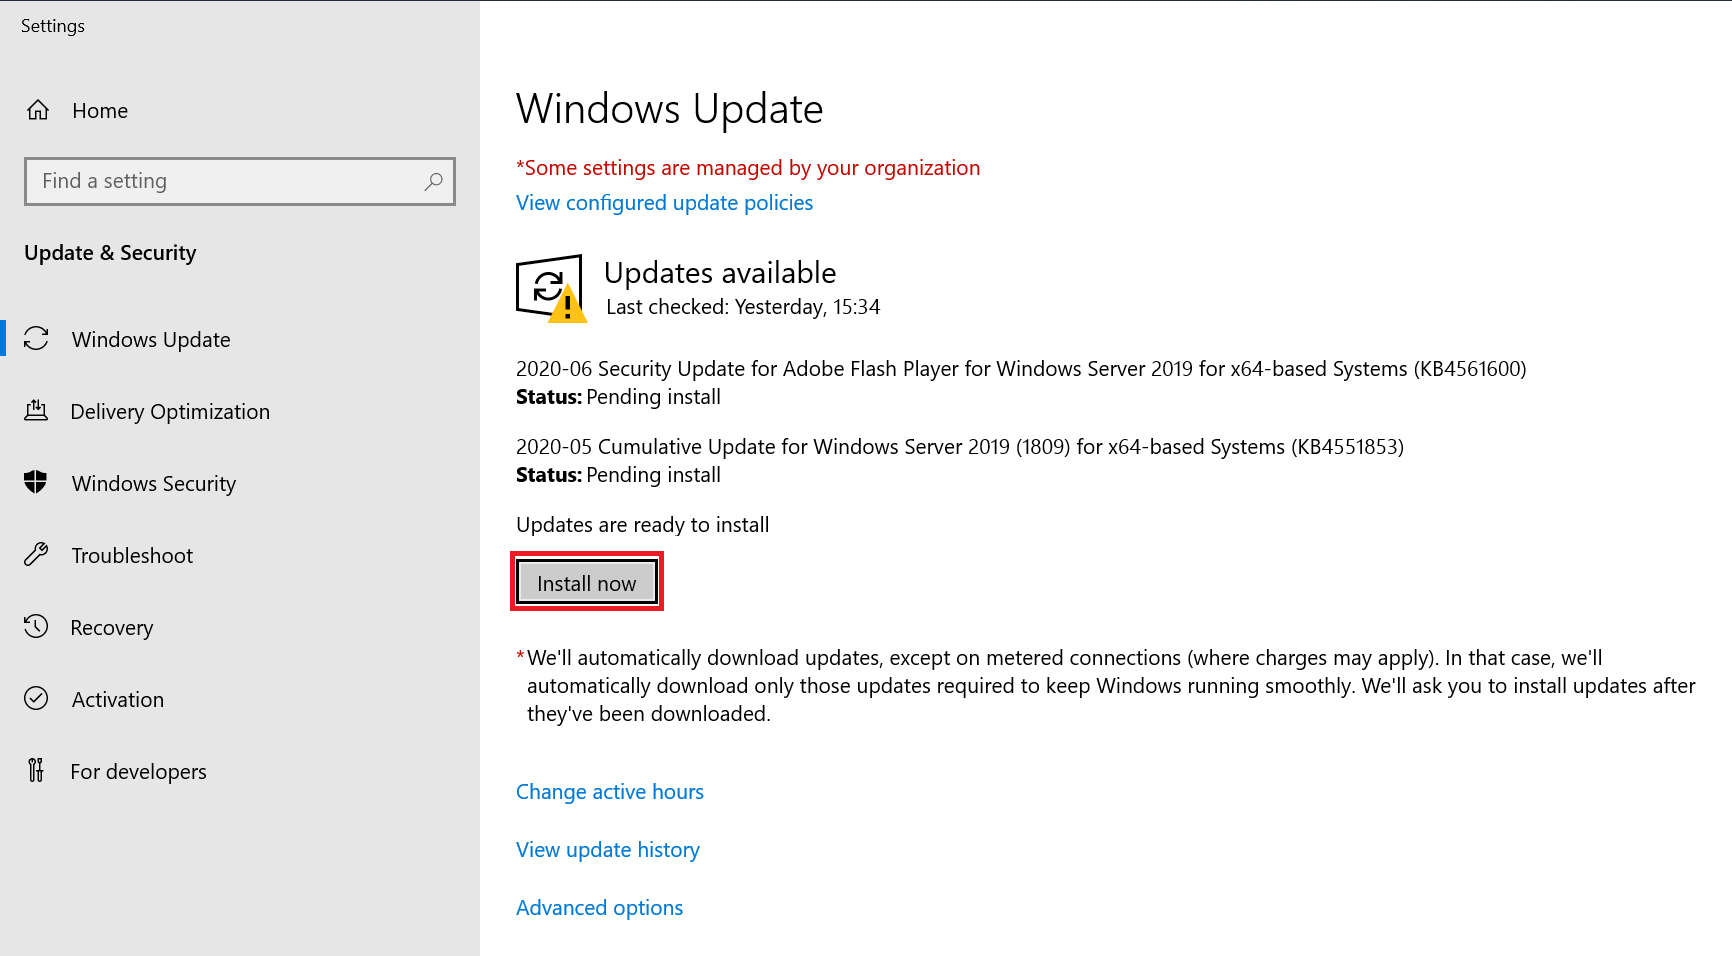 windows update install now